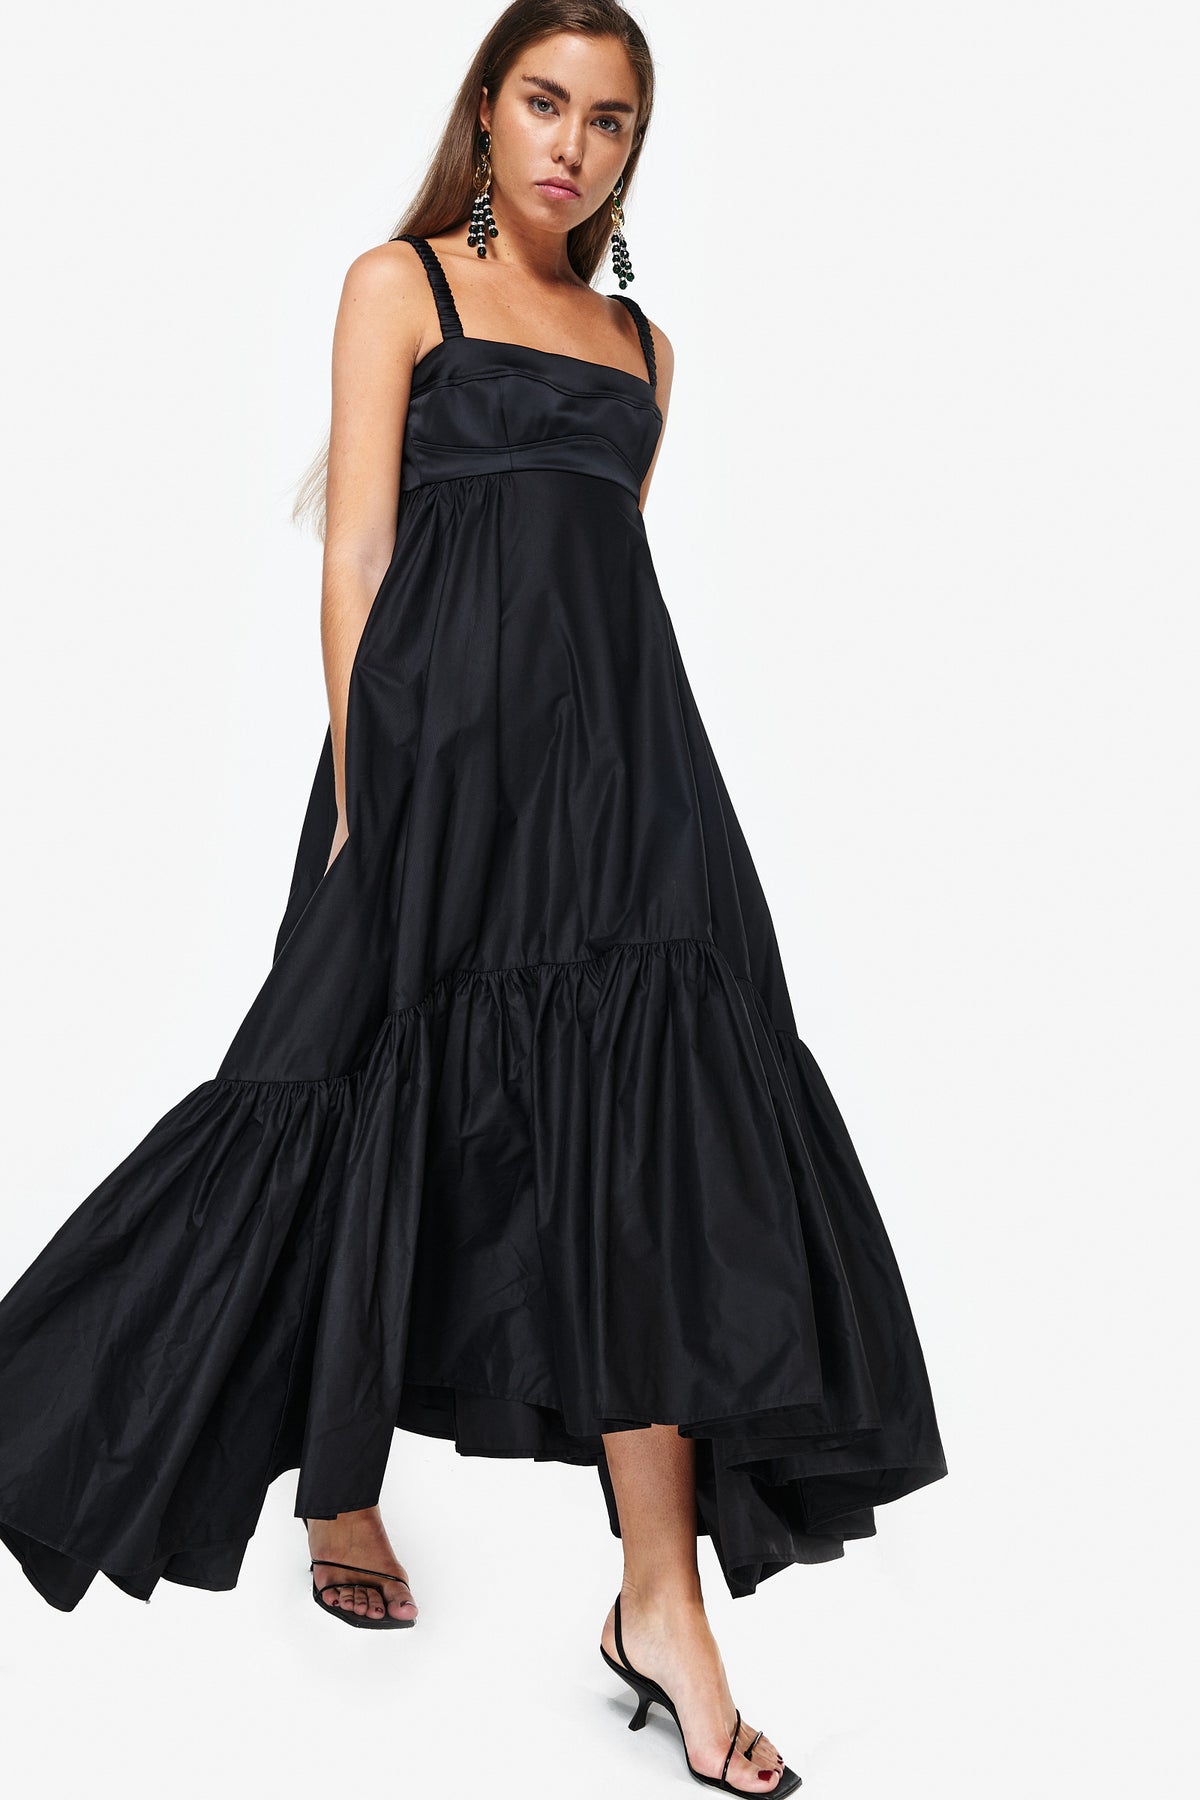 Black Ruffle Dress – Couper